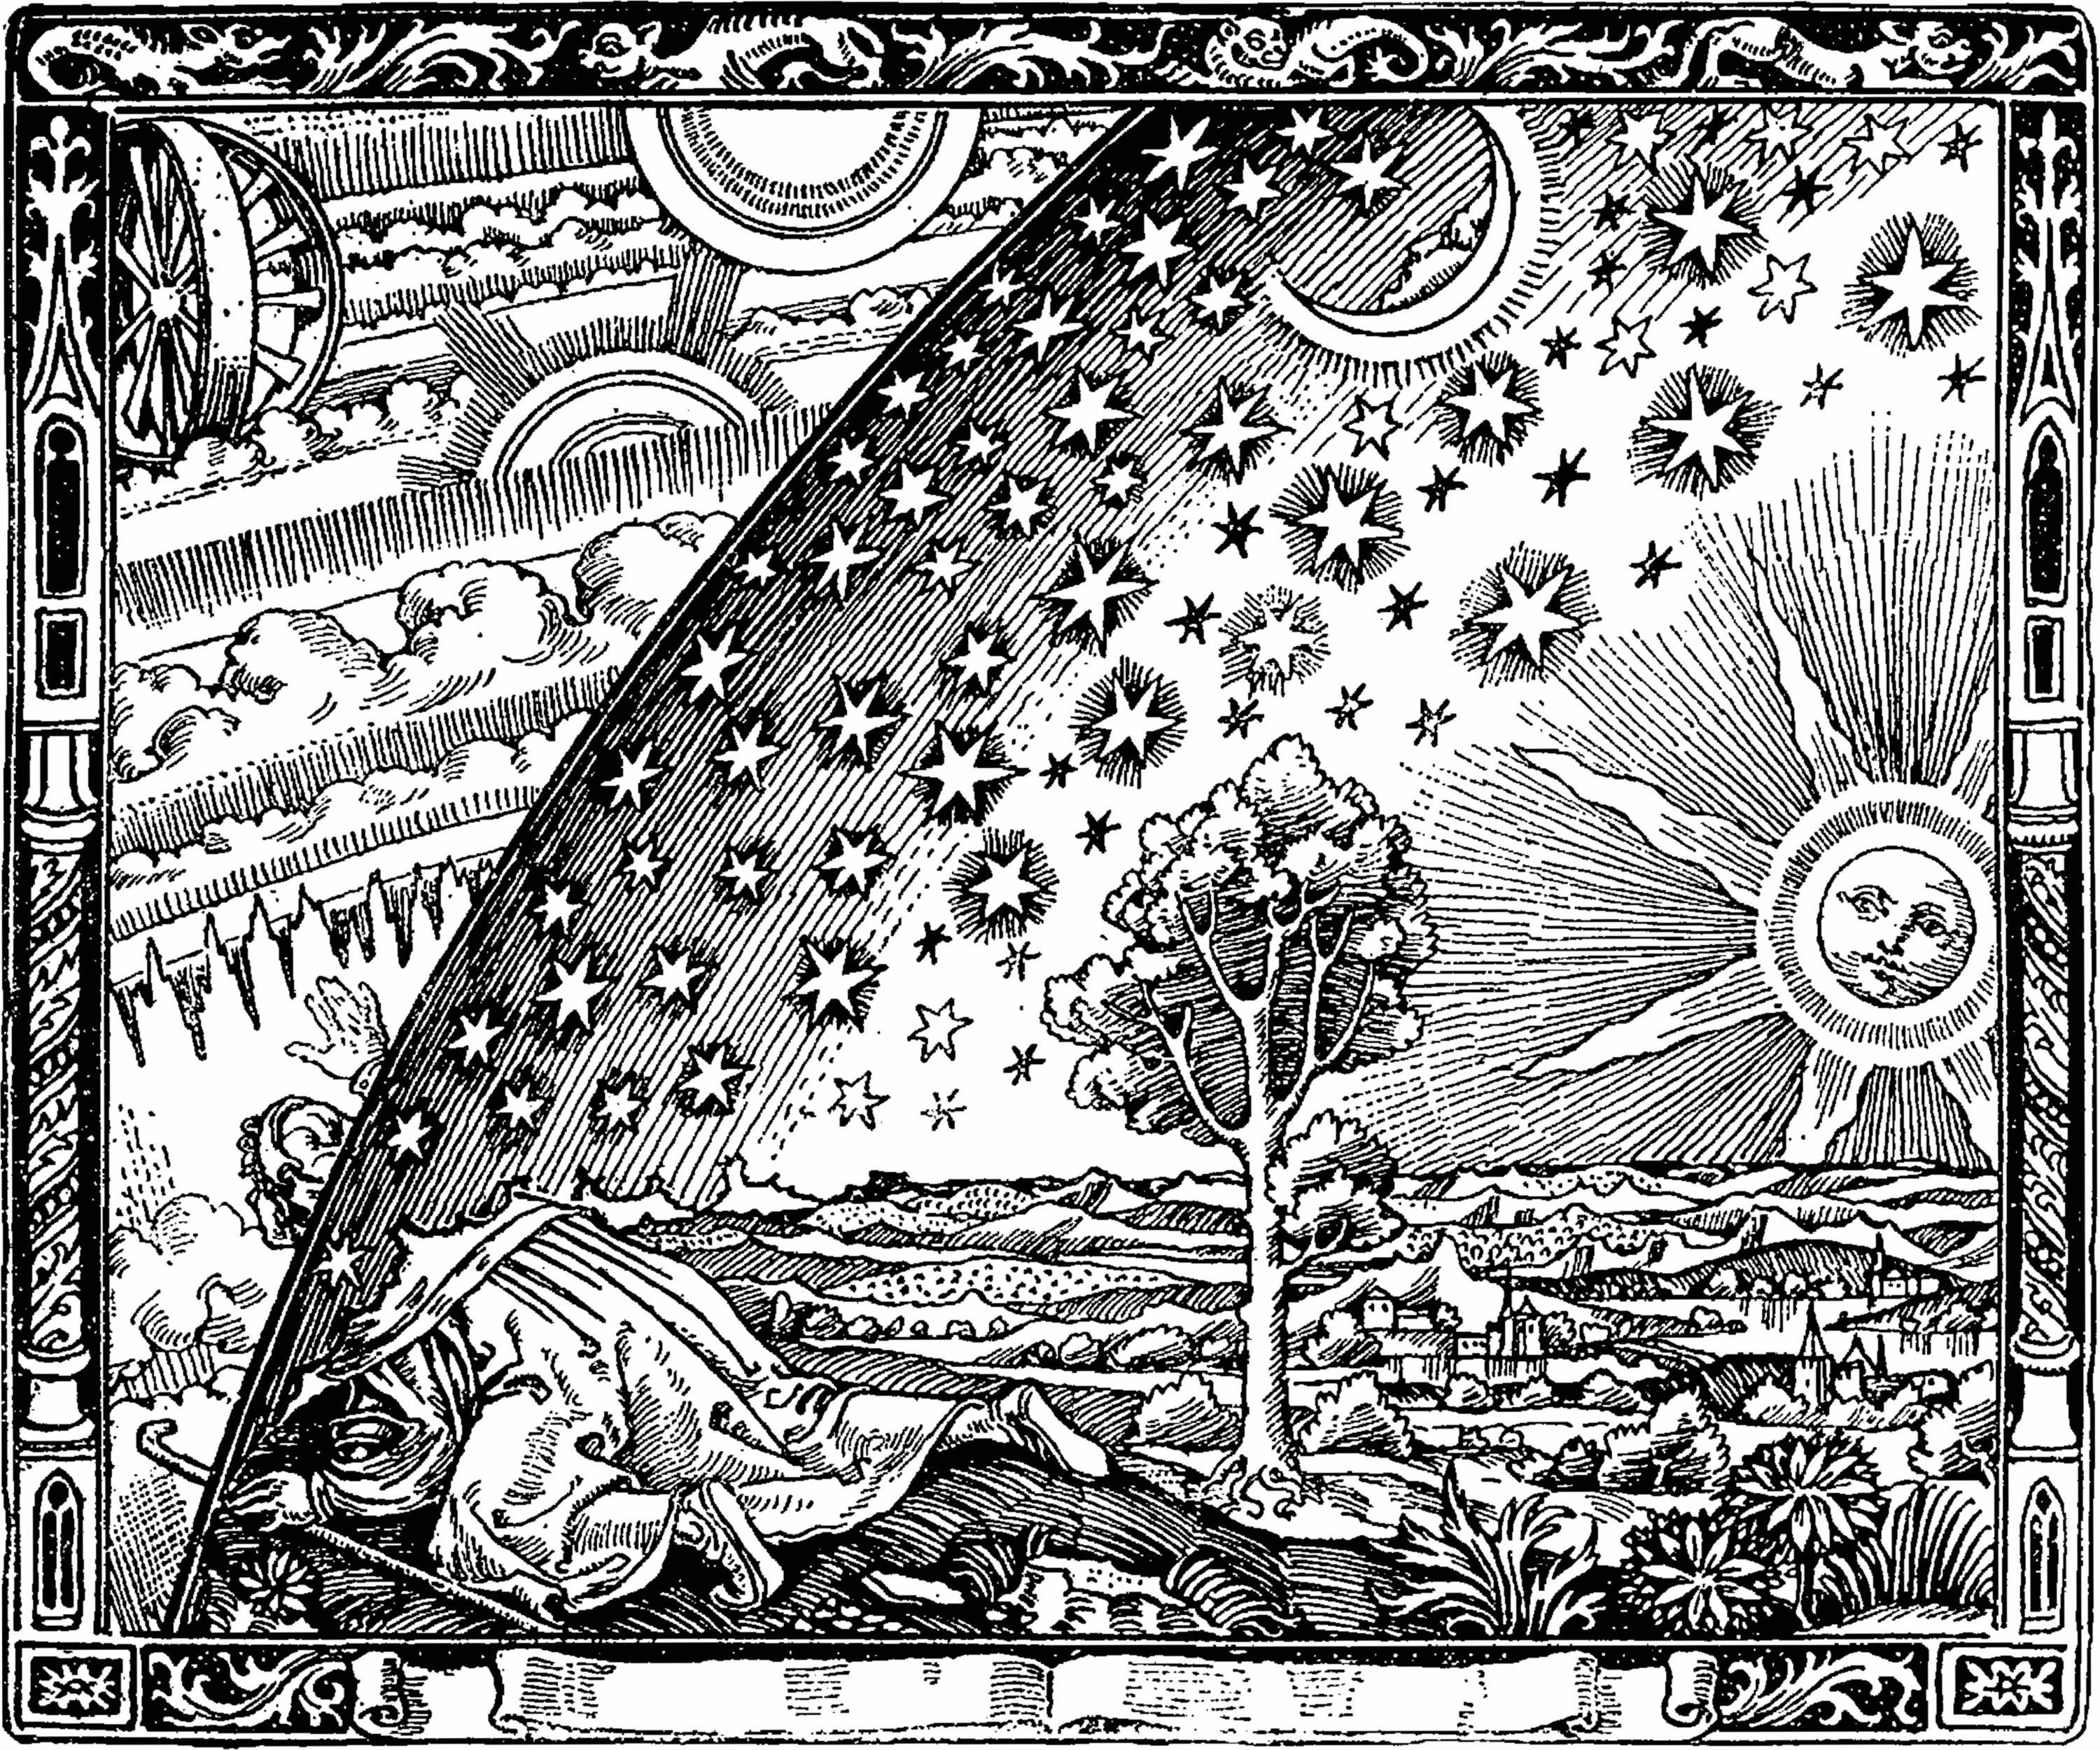 Flammarions Holzstich – erstmals erschienen in L’atmosphère, Paris 1888, als Illustration zu La forme du ciel im Kapitel Le jour, gemeinfrei